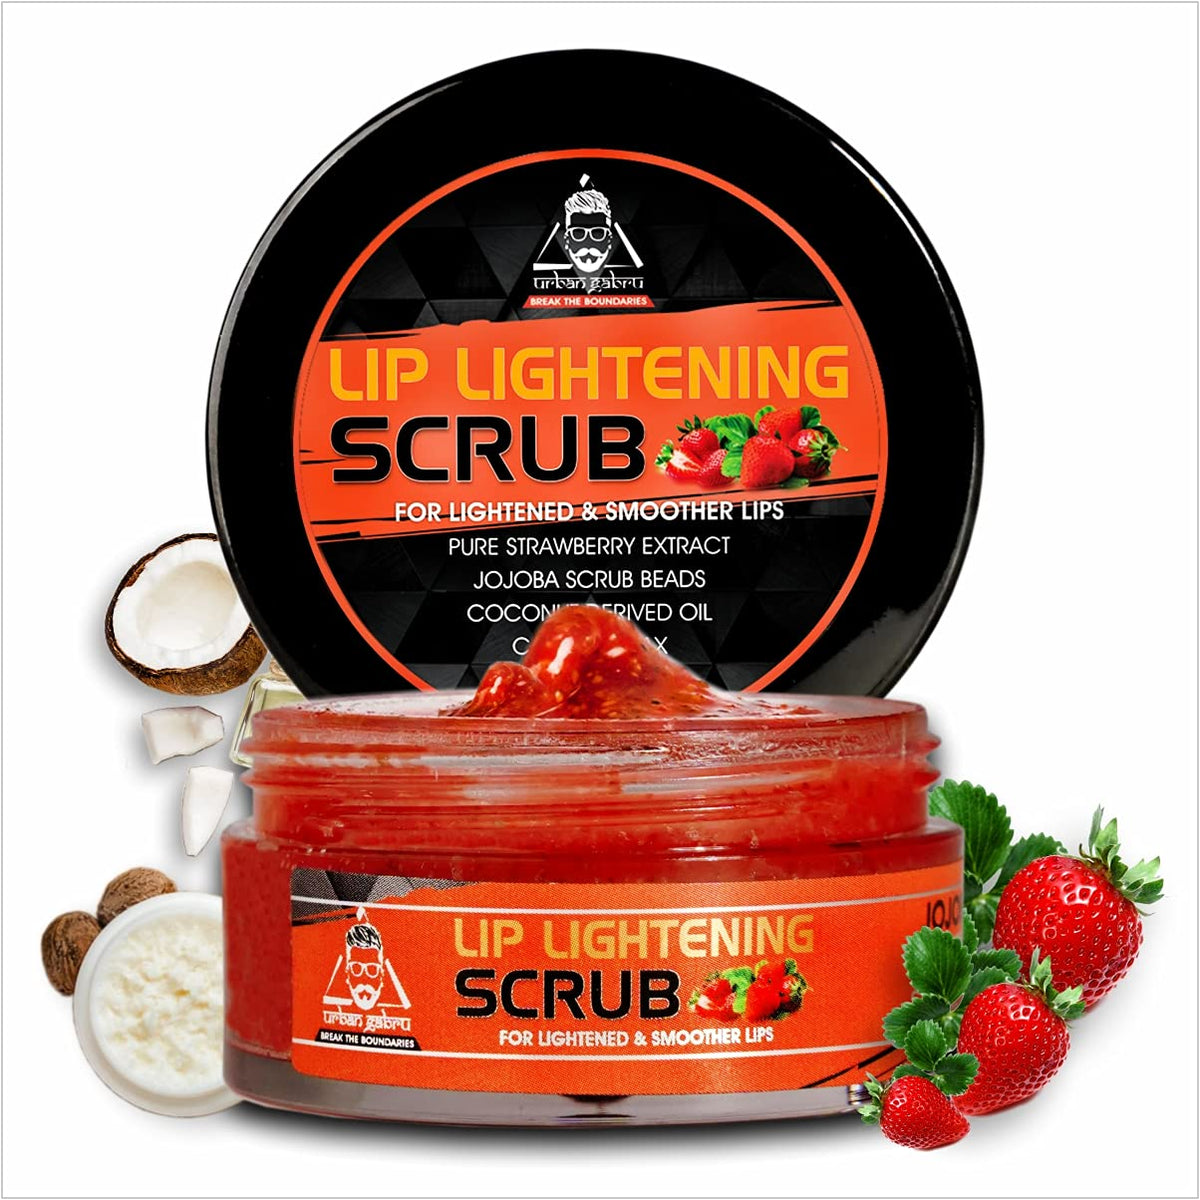 Urbangabru Lip Scrub Balm for Lightening & Brightening Dark Lips with Shea Butter, Coconut Oil & Strawberry Extracts, 25g